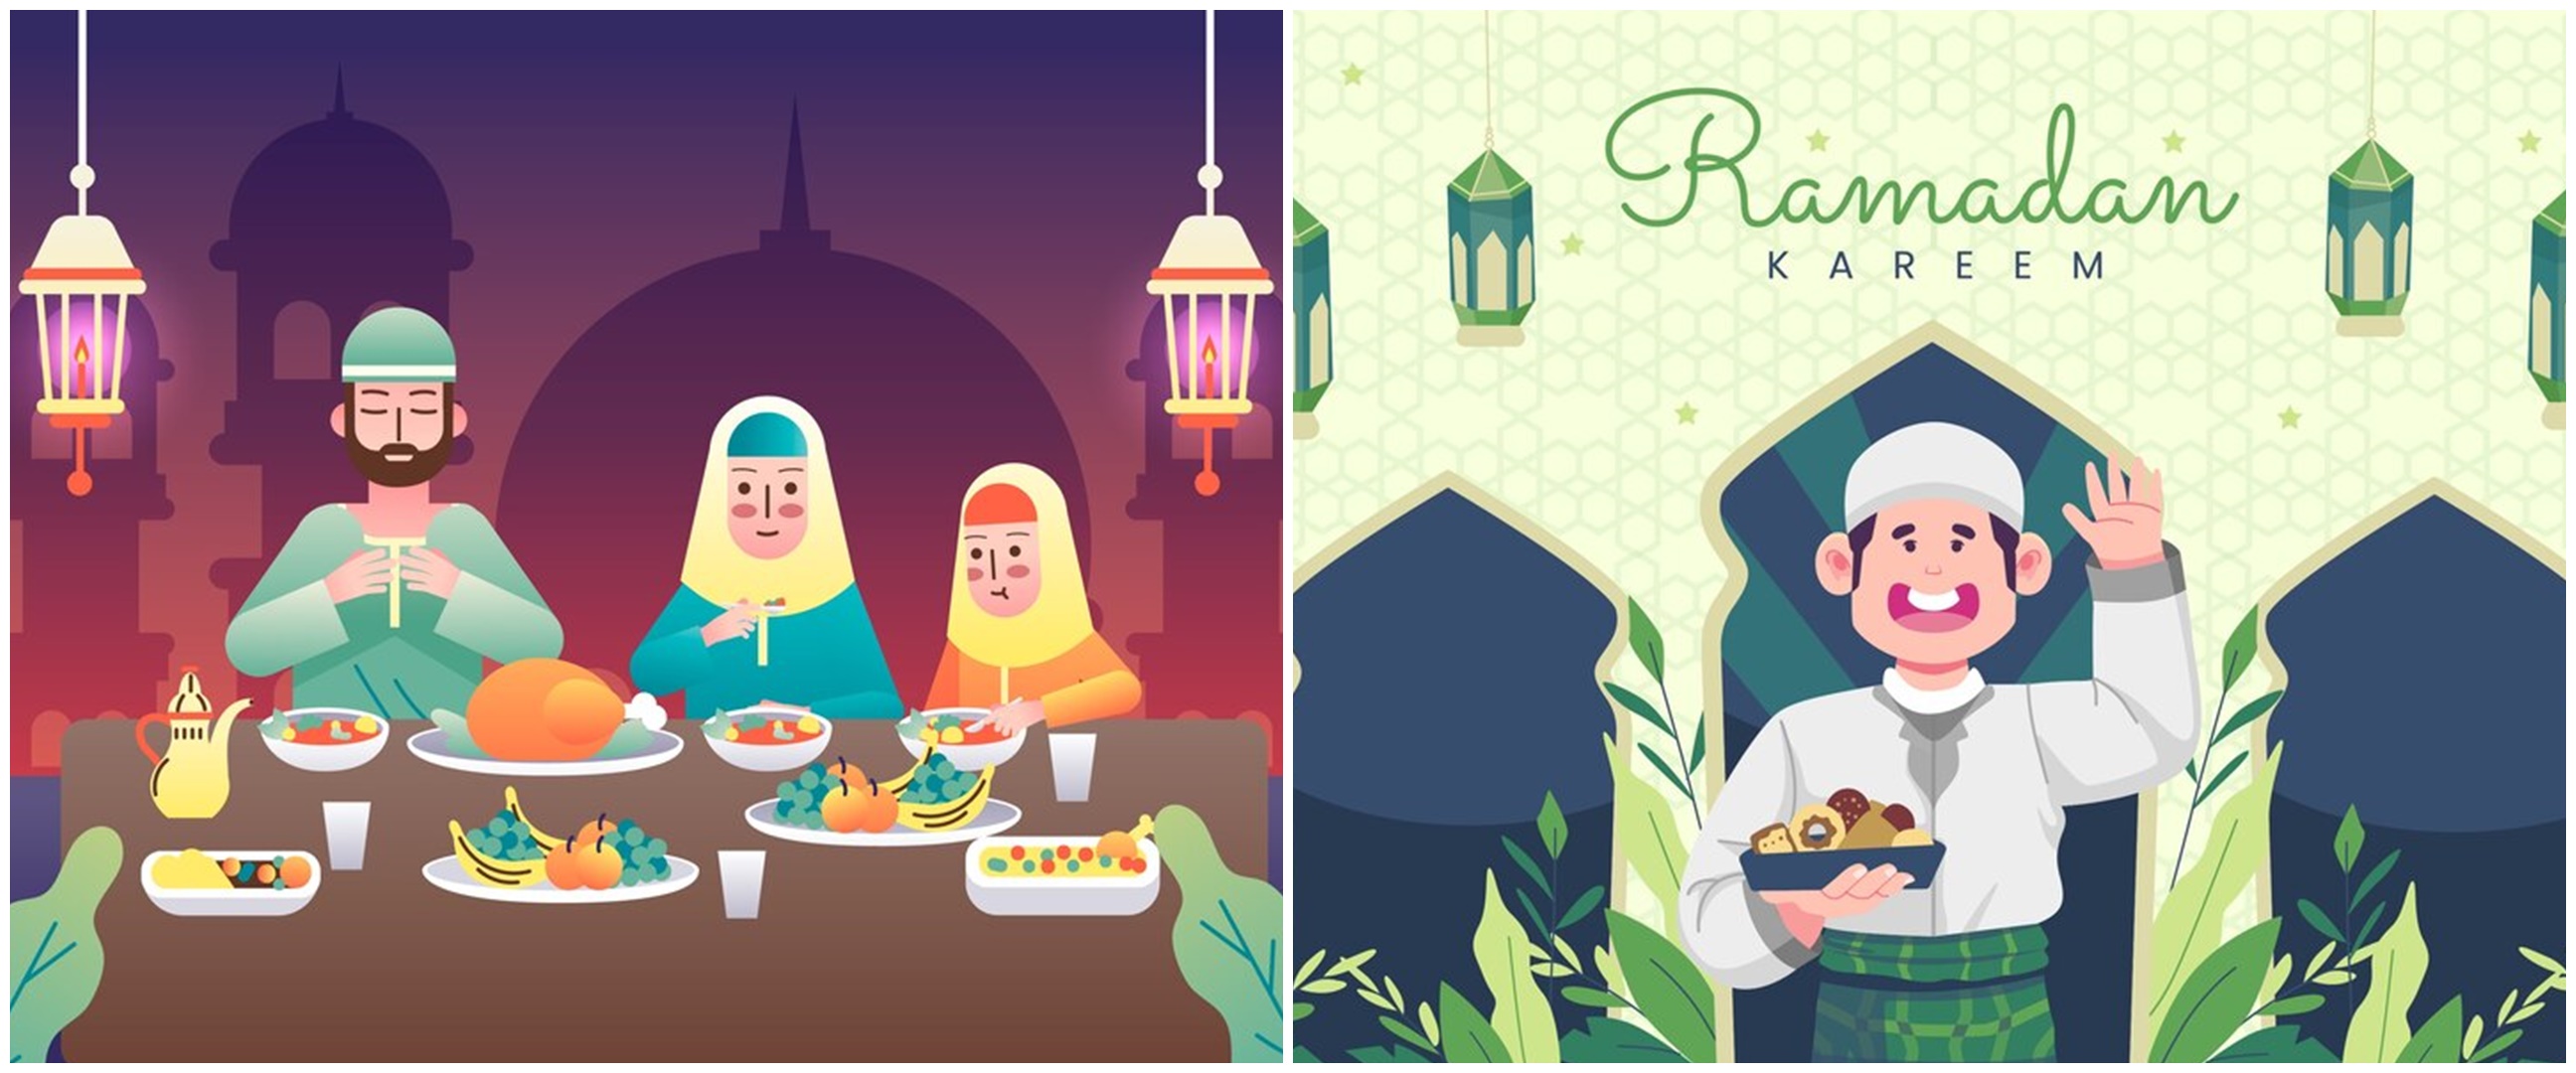 150 Kata-kata mutiara menyambut bulan Ramadhan, penuh motivasi menyongsong keberkahan